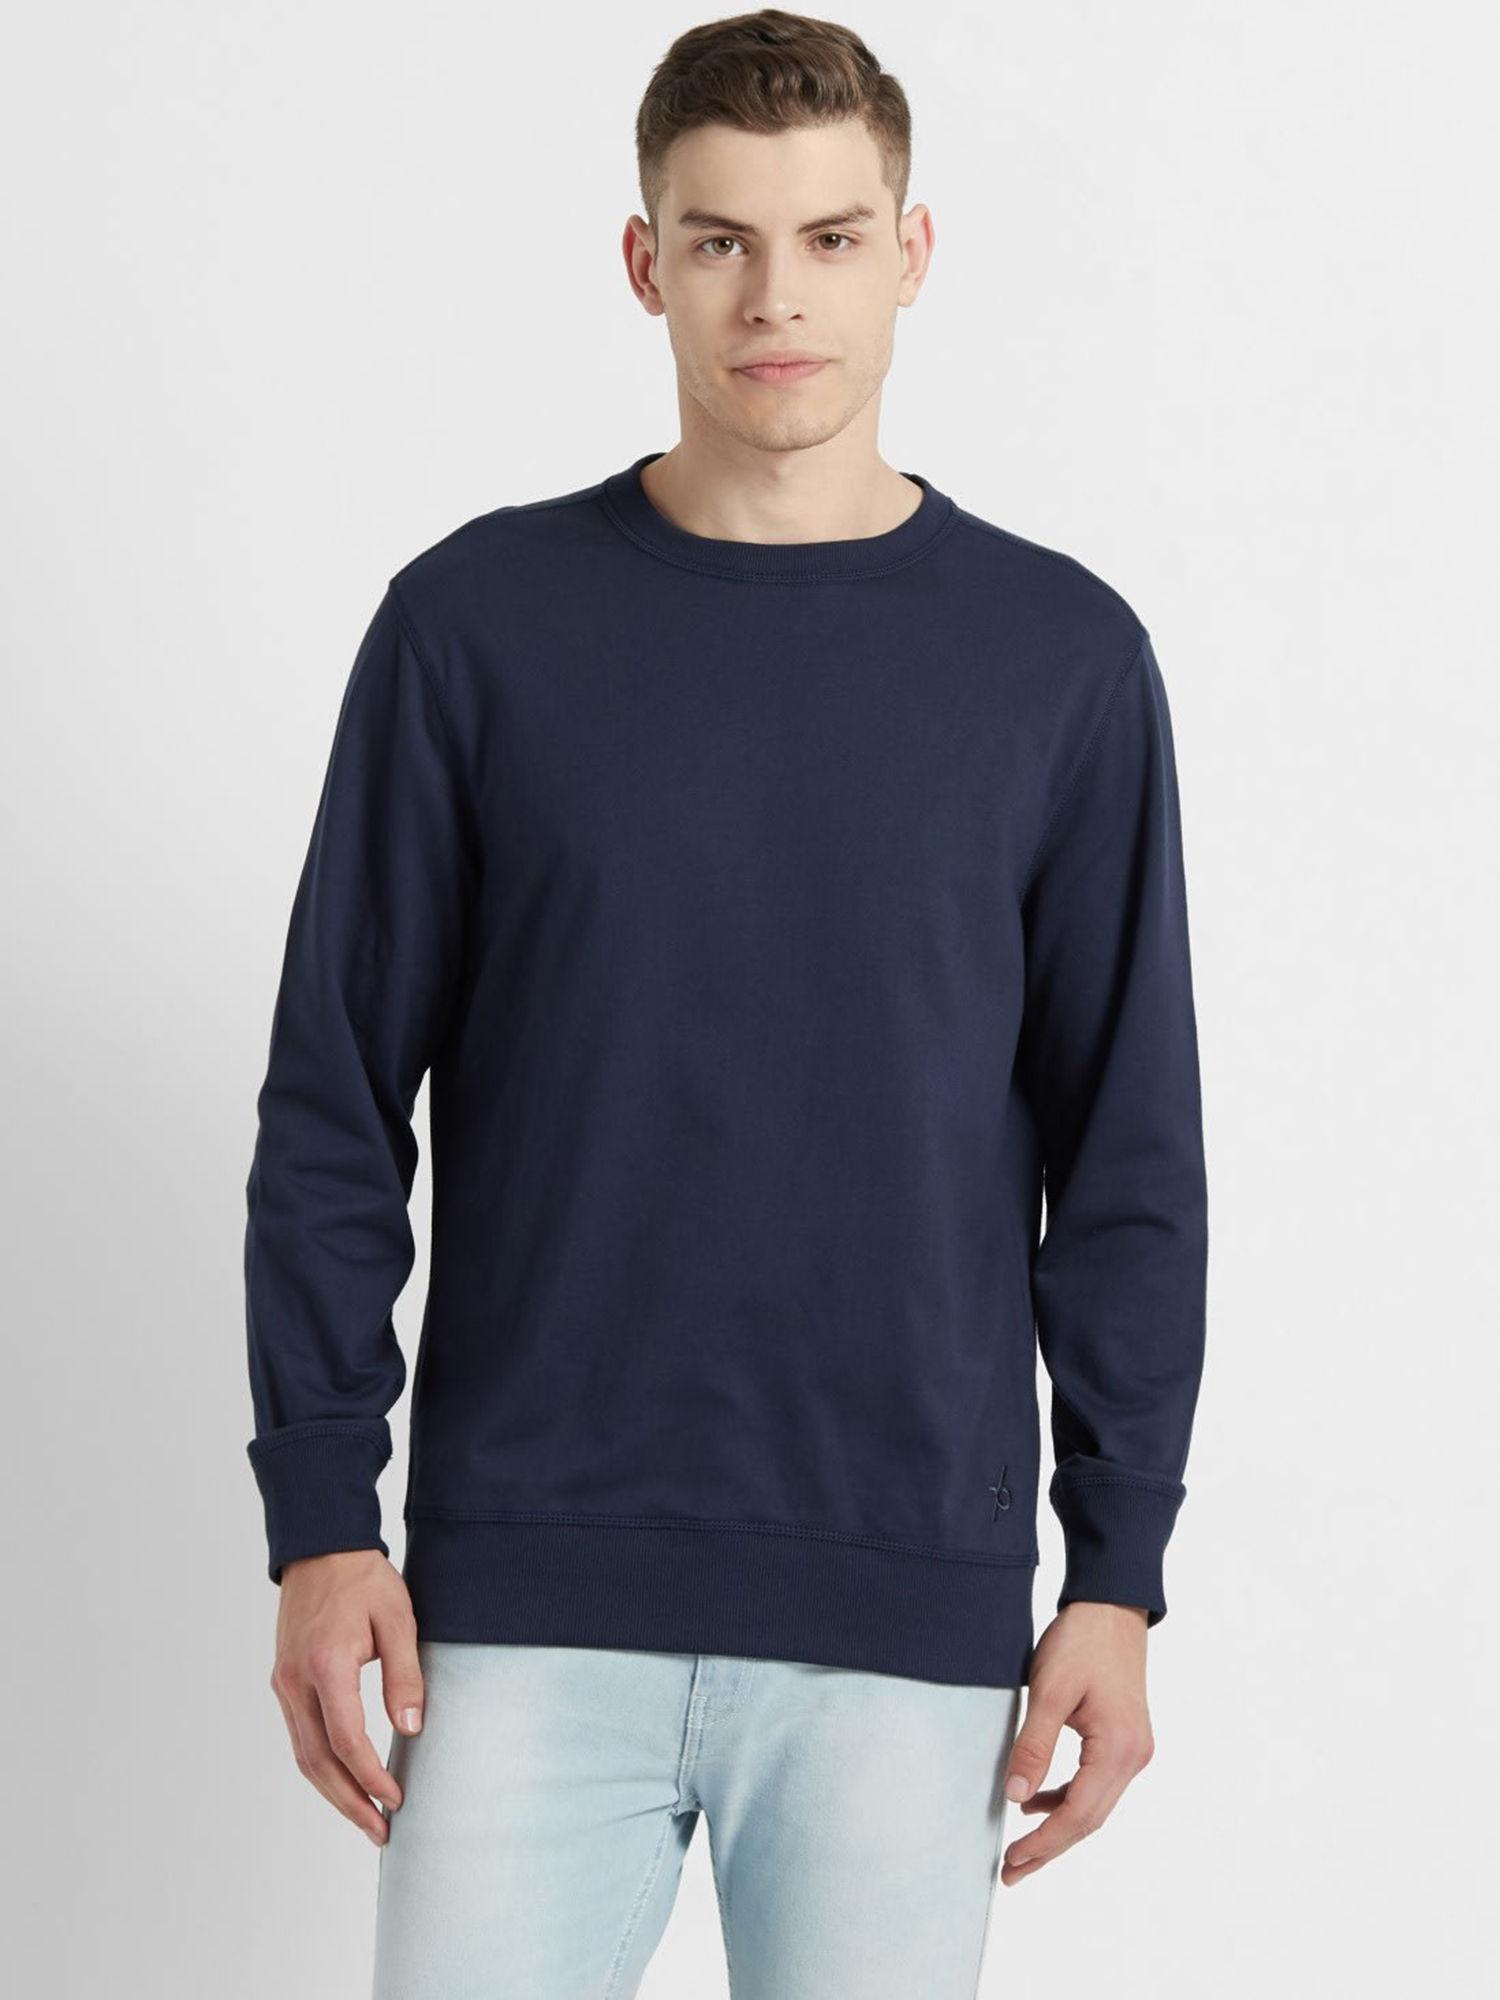 navy blue solid sweatshirt